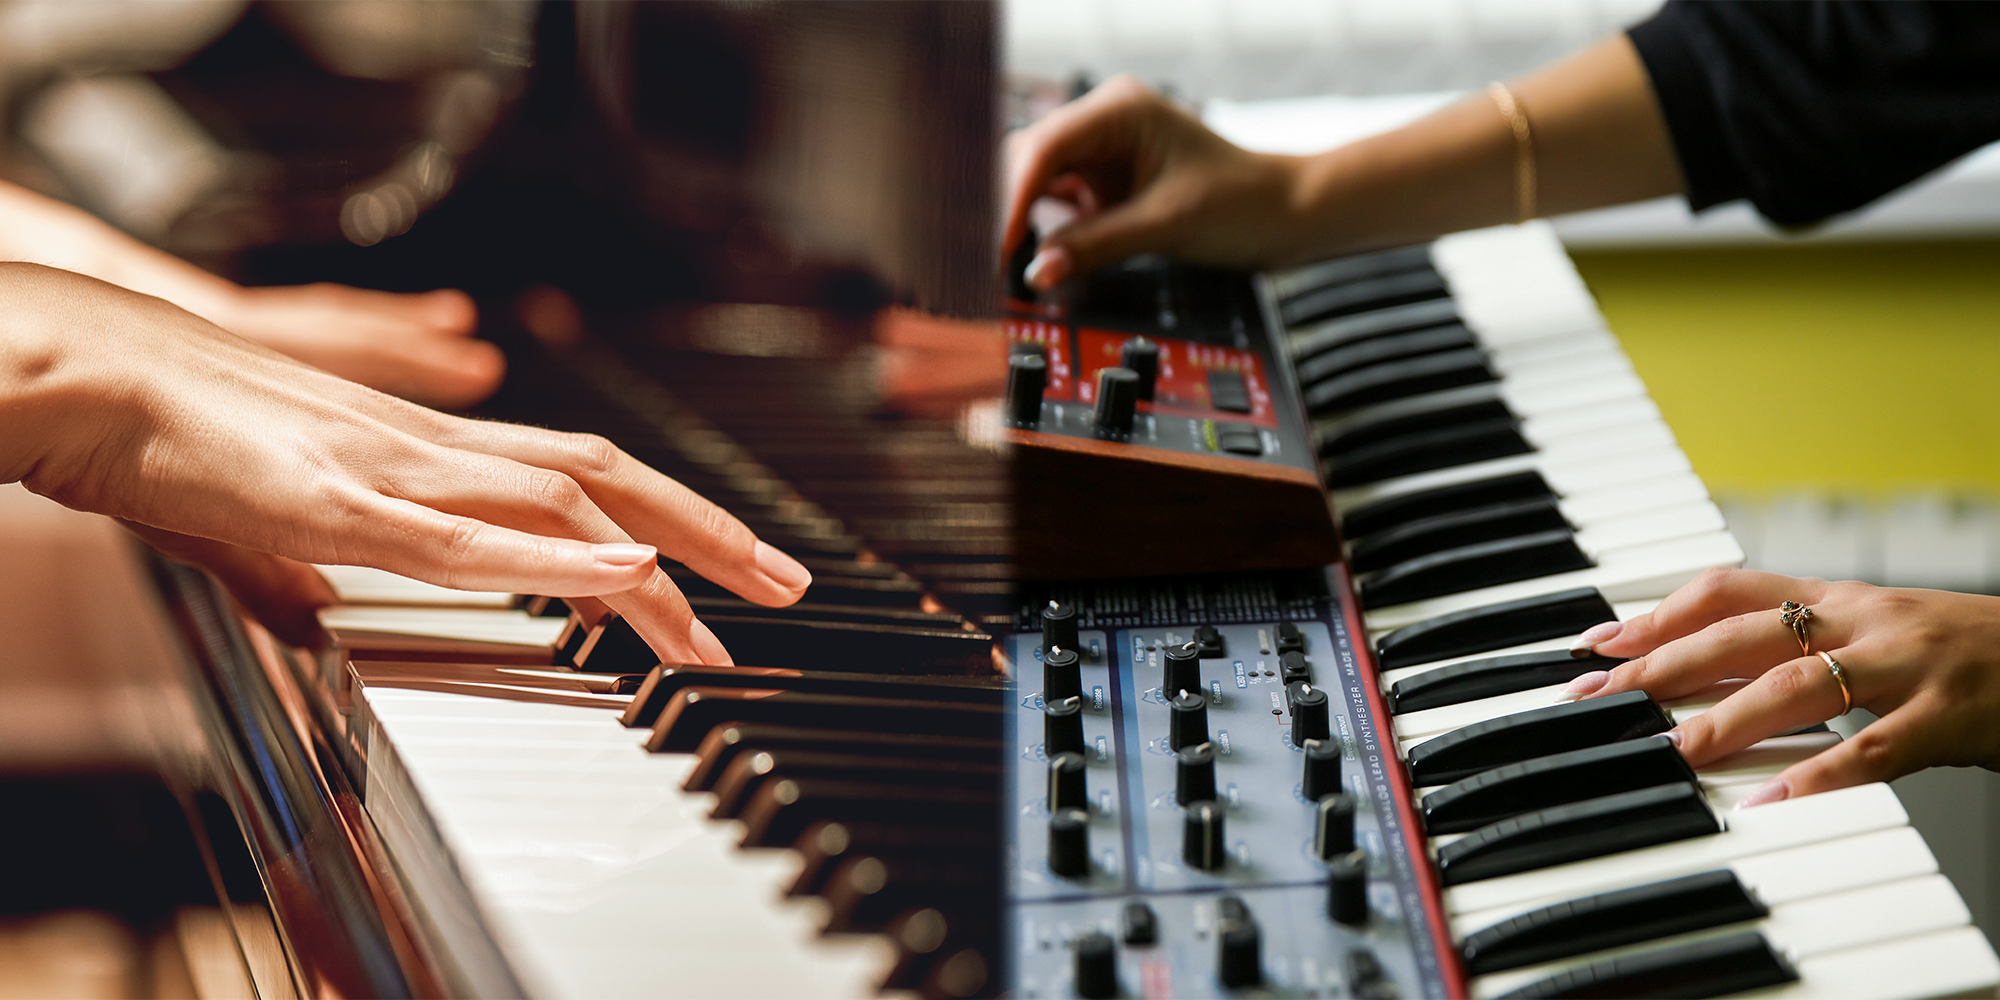 Acoustic Pianos vs. Digital Pianos vs. Keyboards